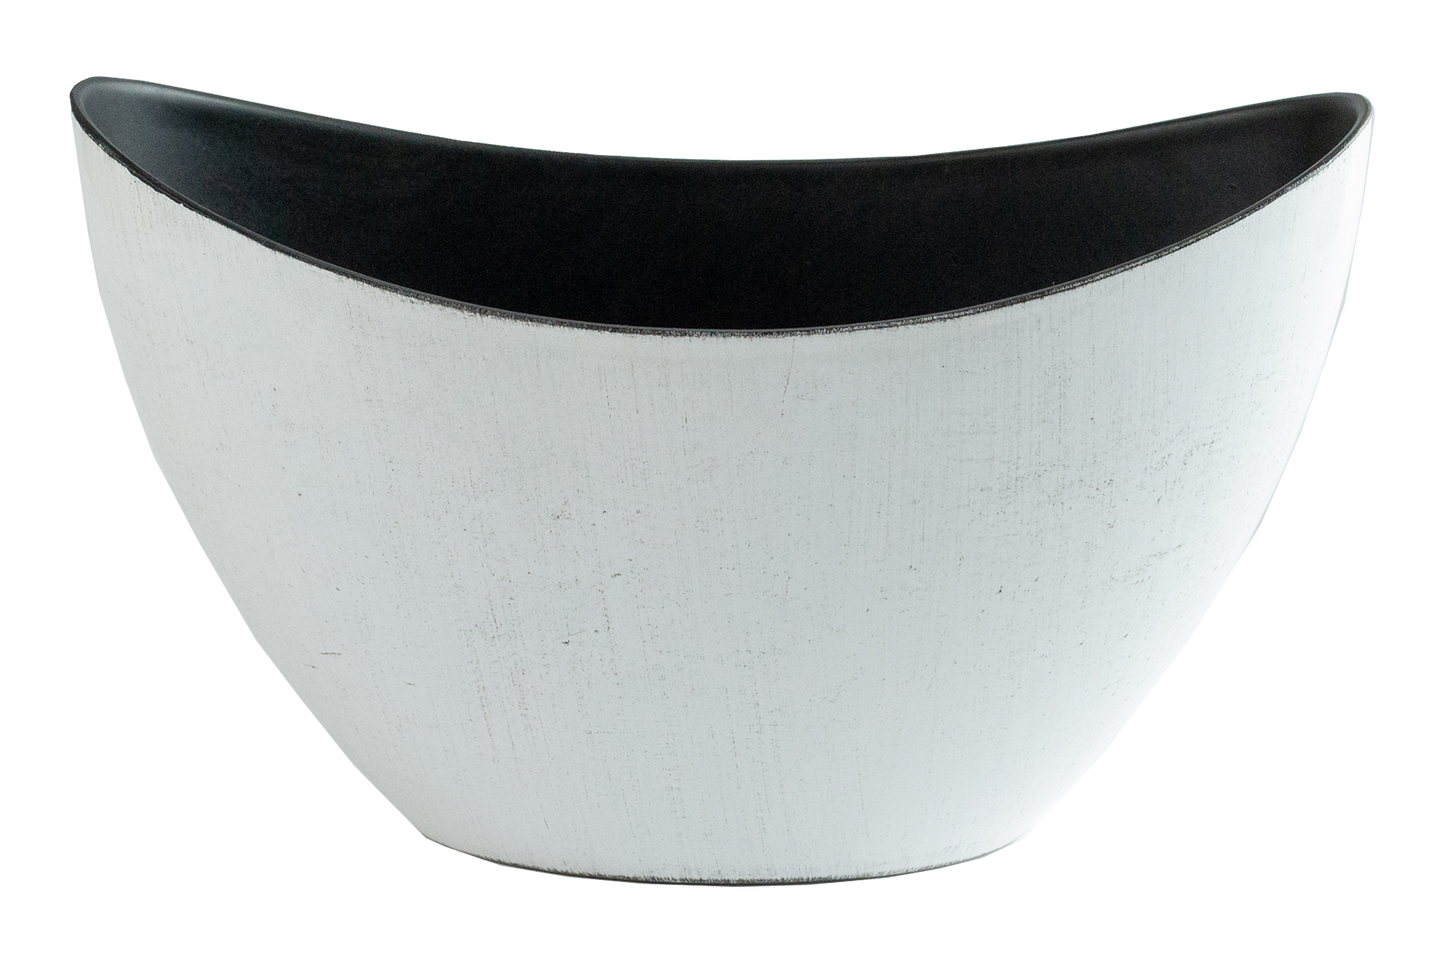 Resin Glaze Oval Tray - The Standard Design Group